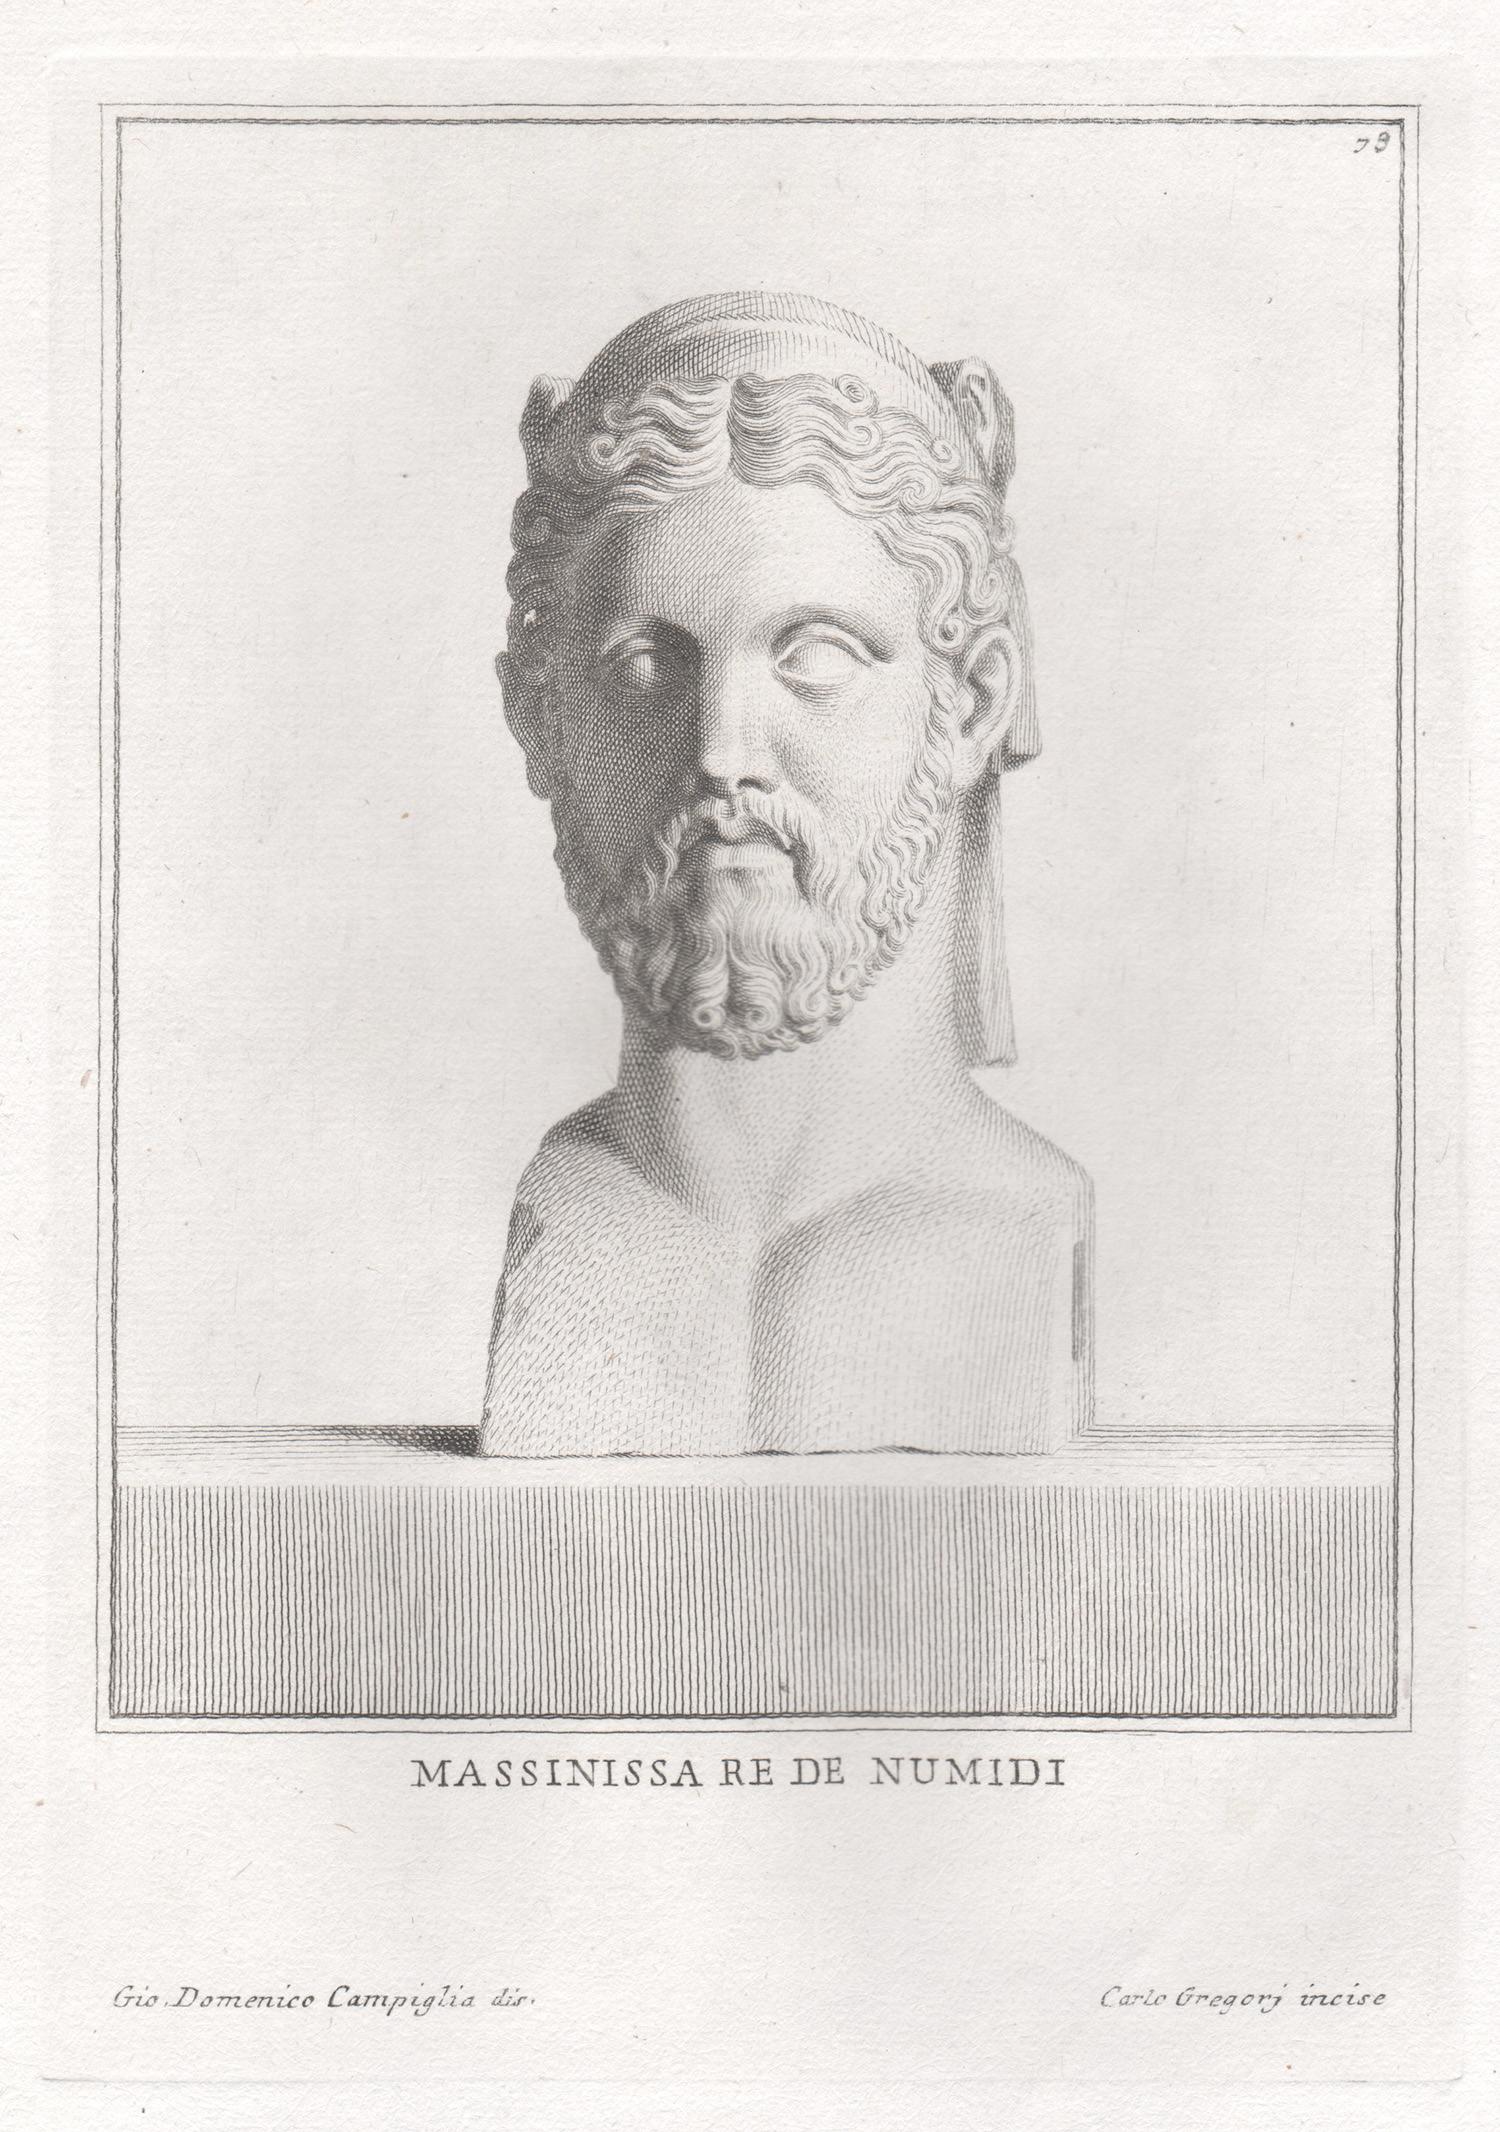 Giovanni Domenico Campiglia Portrait Print - Masinissa, King of Nubia, C18th Grand Tour Classical antique engraving print